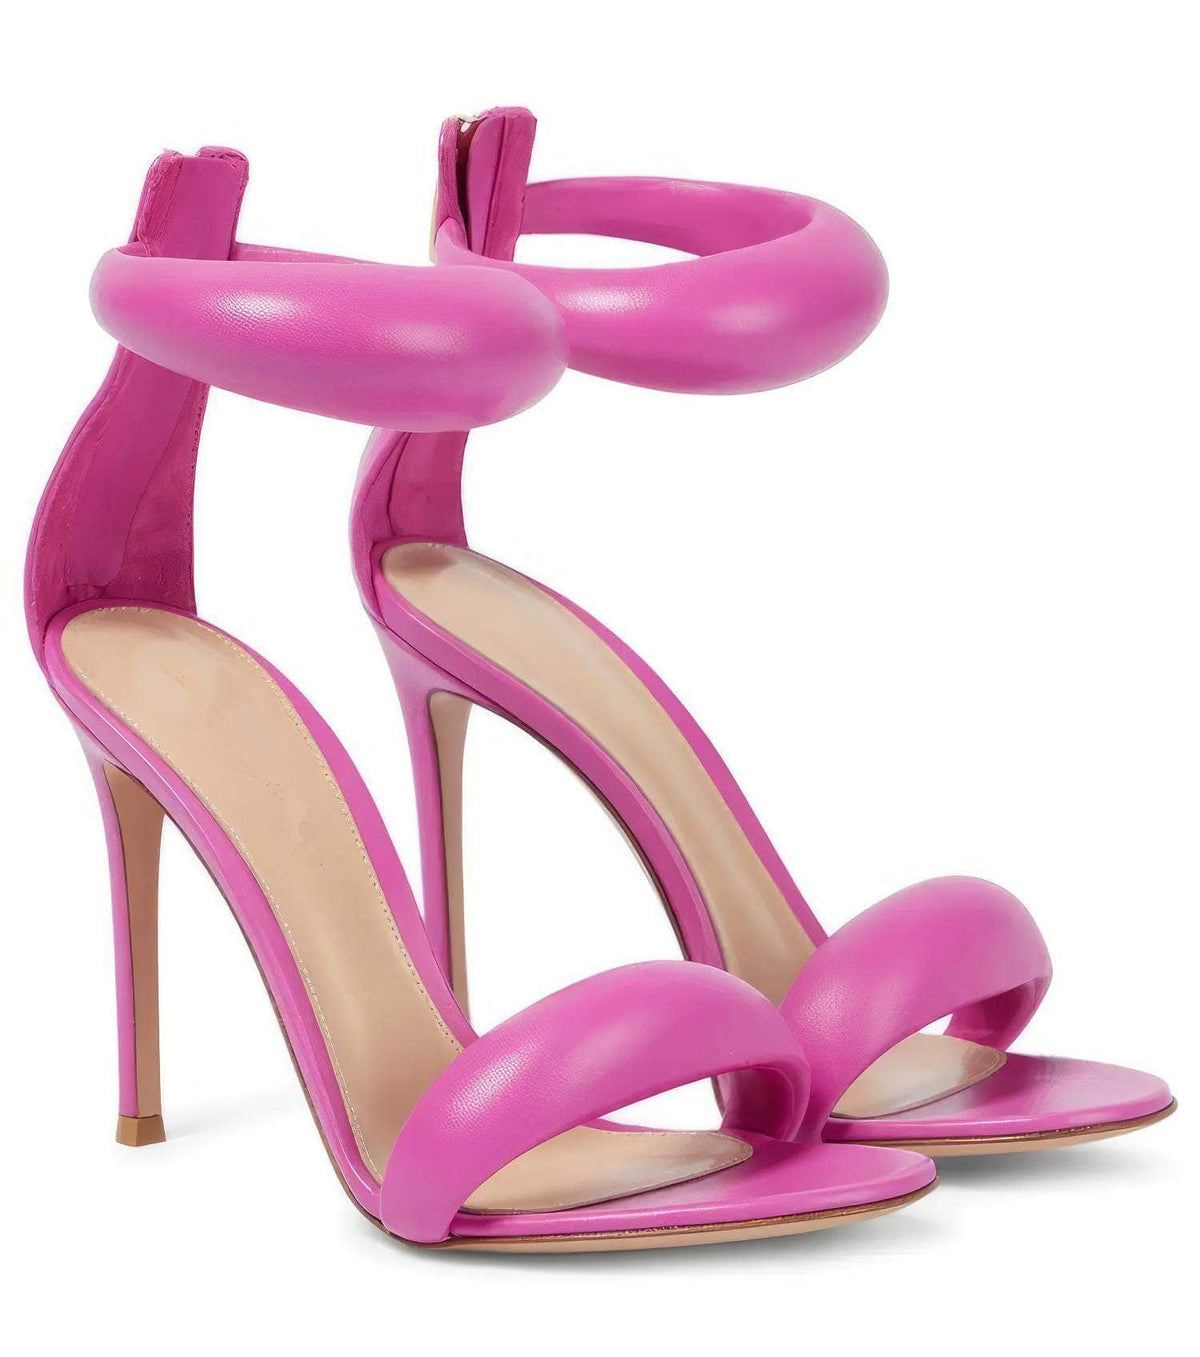 Ankle Strap Back Toe Zipper Heels EU 33 / Pink / 7.5cm